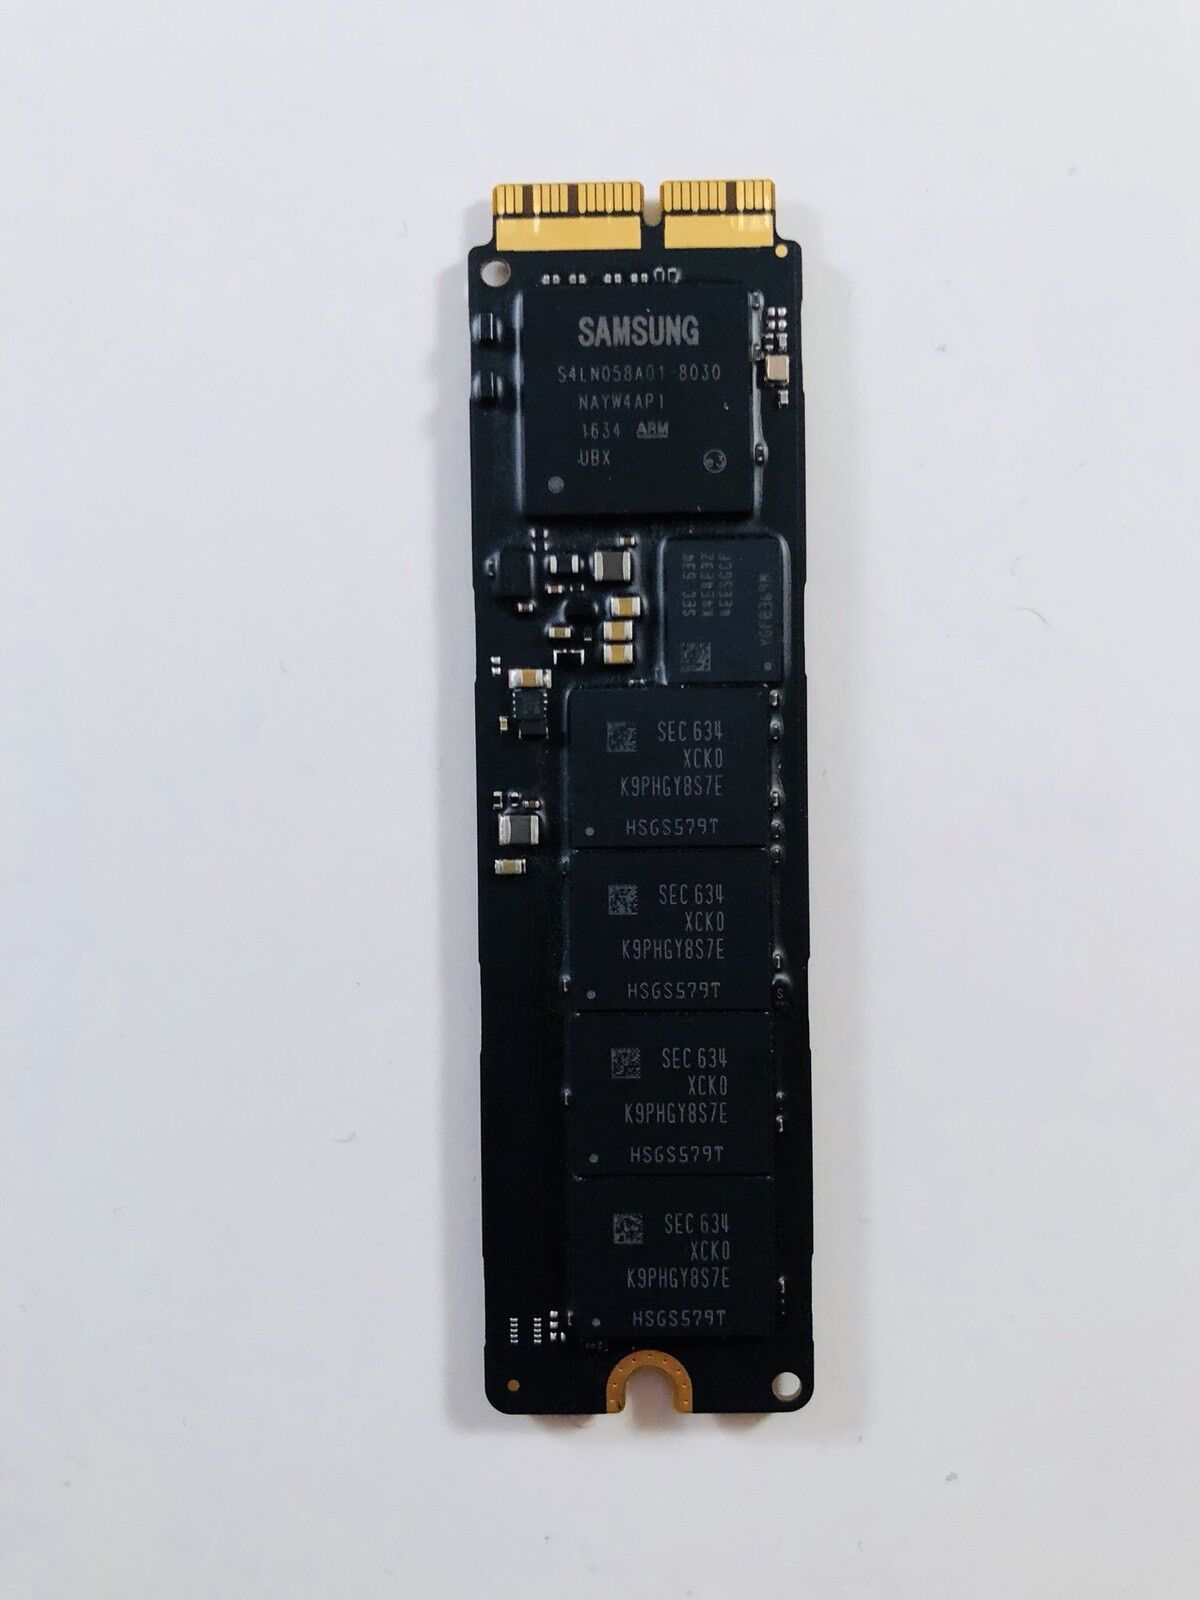 samsung   512 PCIe SSD Apple MacBook Pro Macbook air  2015  MZ-JPV5120/0A4 1 yr